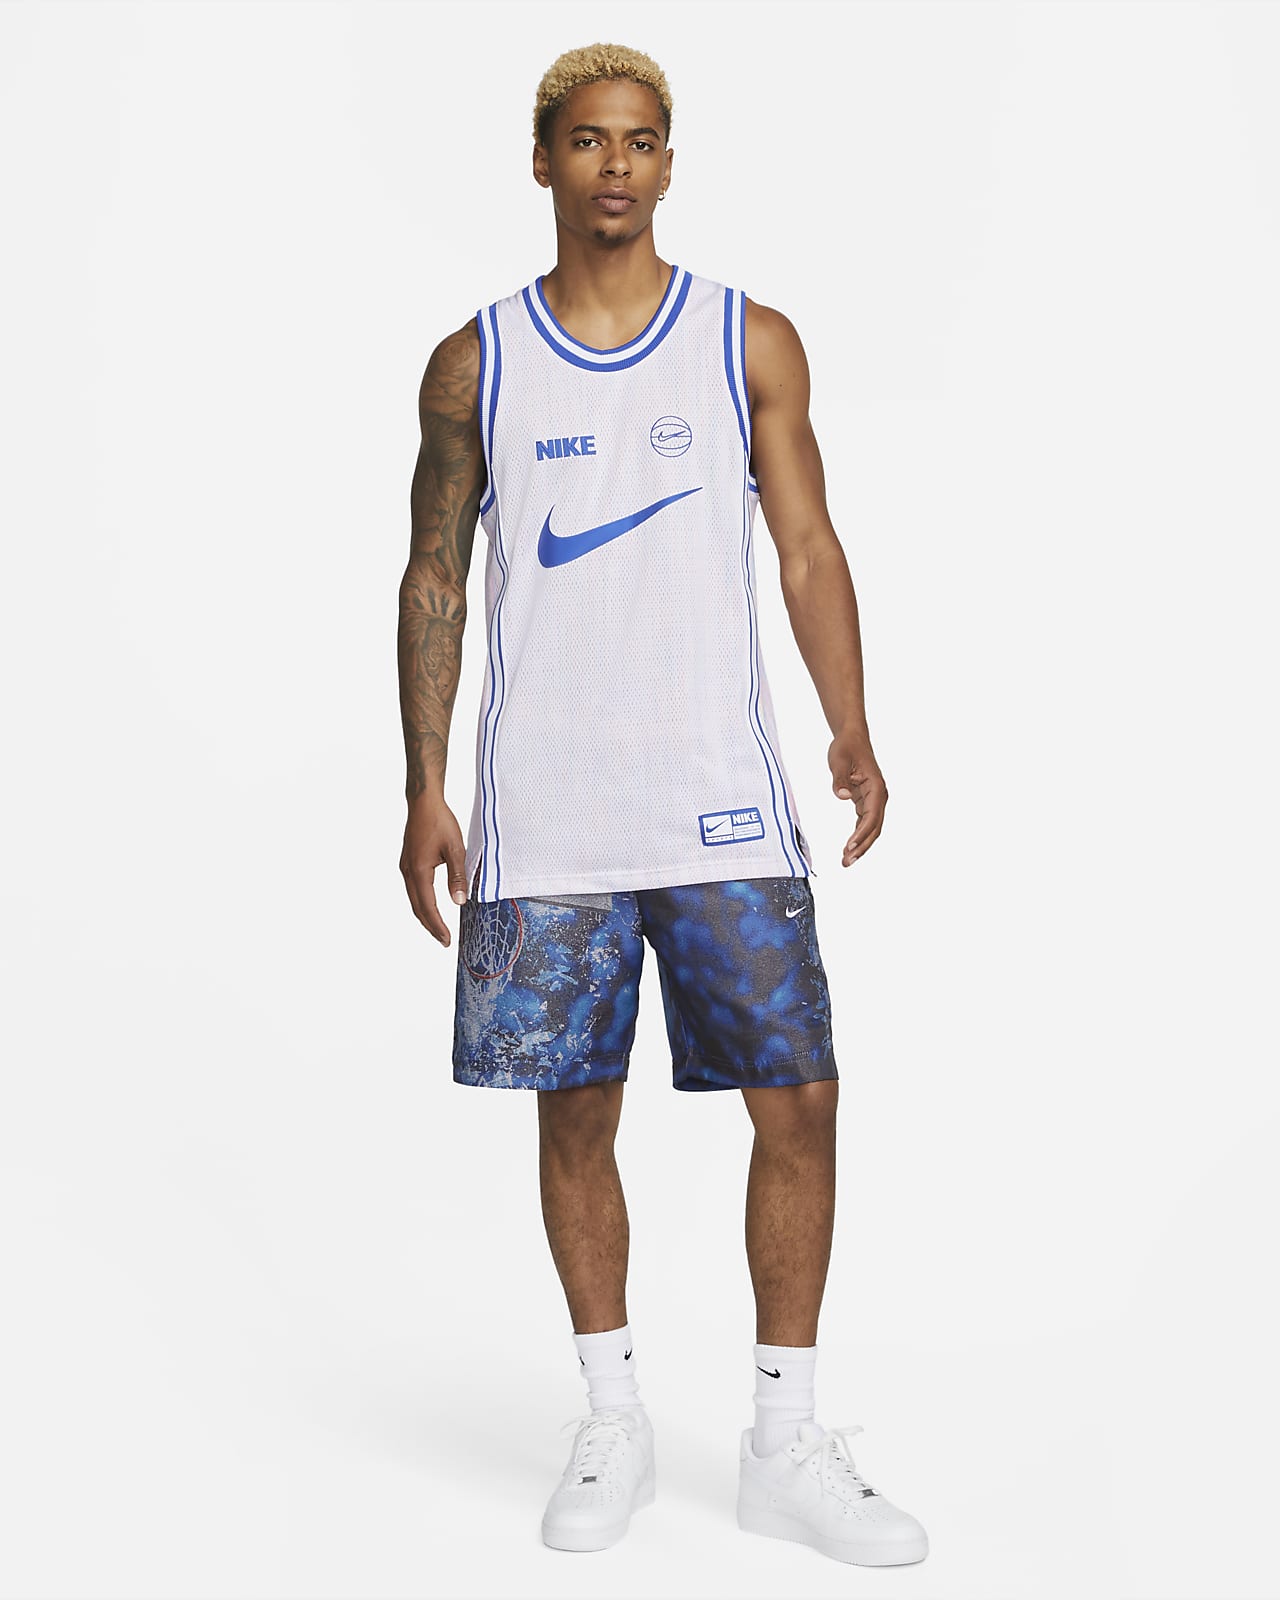 nike basketball jerseys - dye custom Basketball uniform